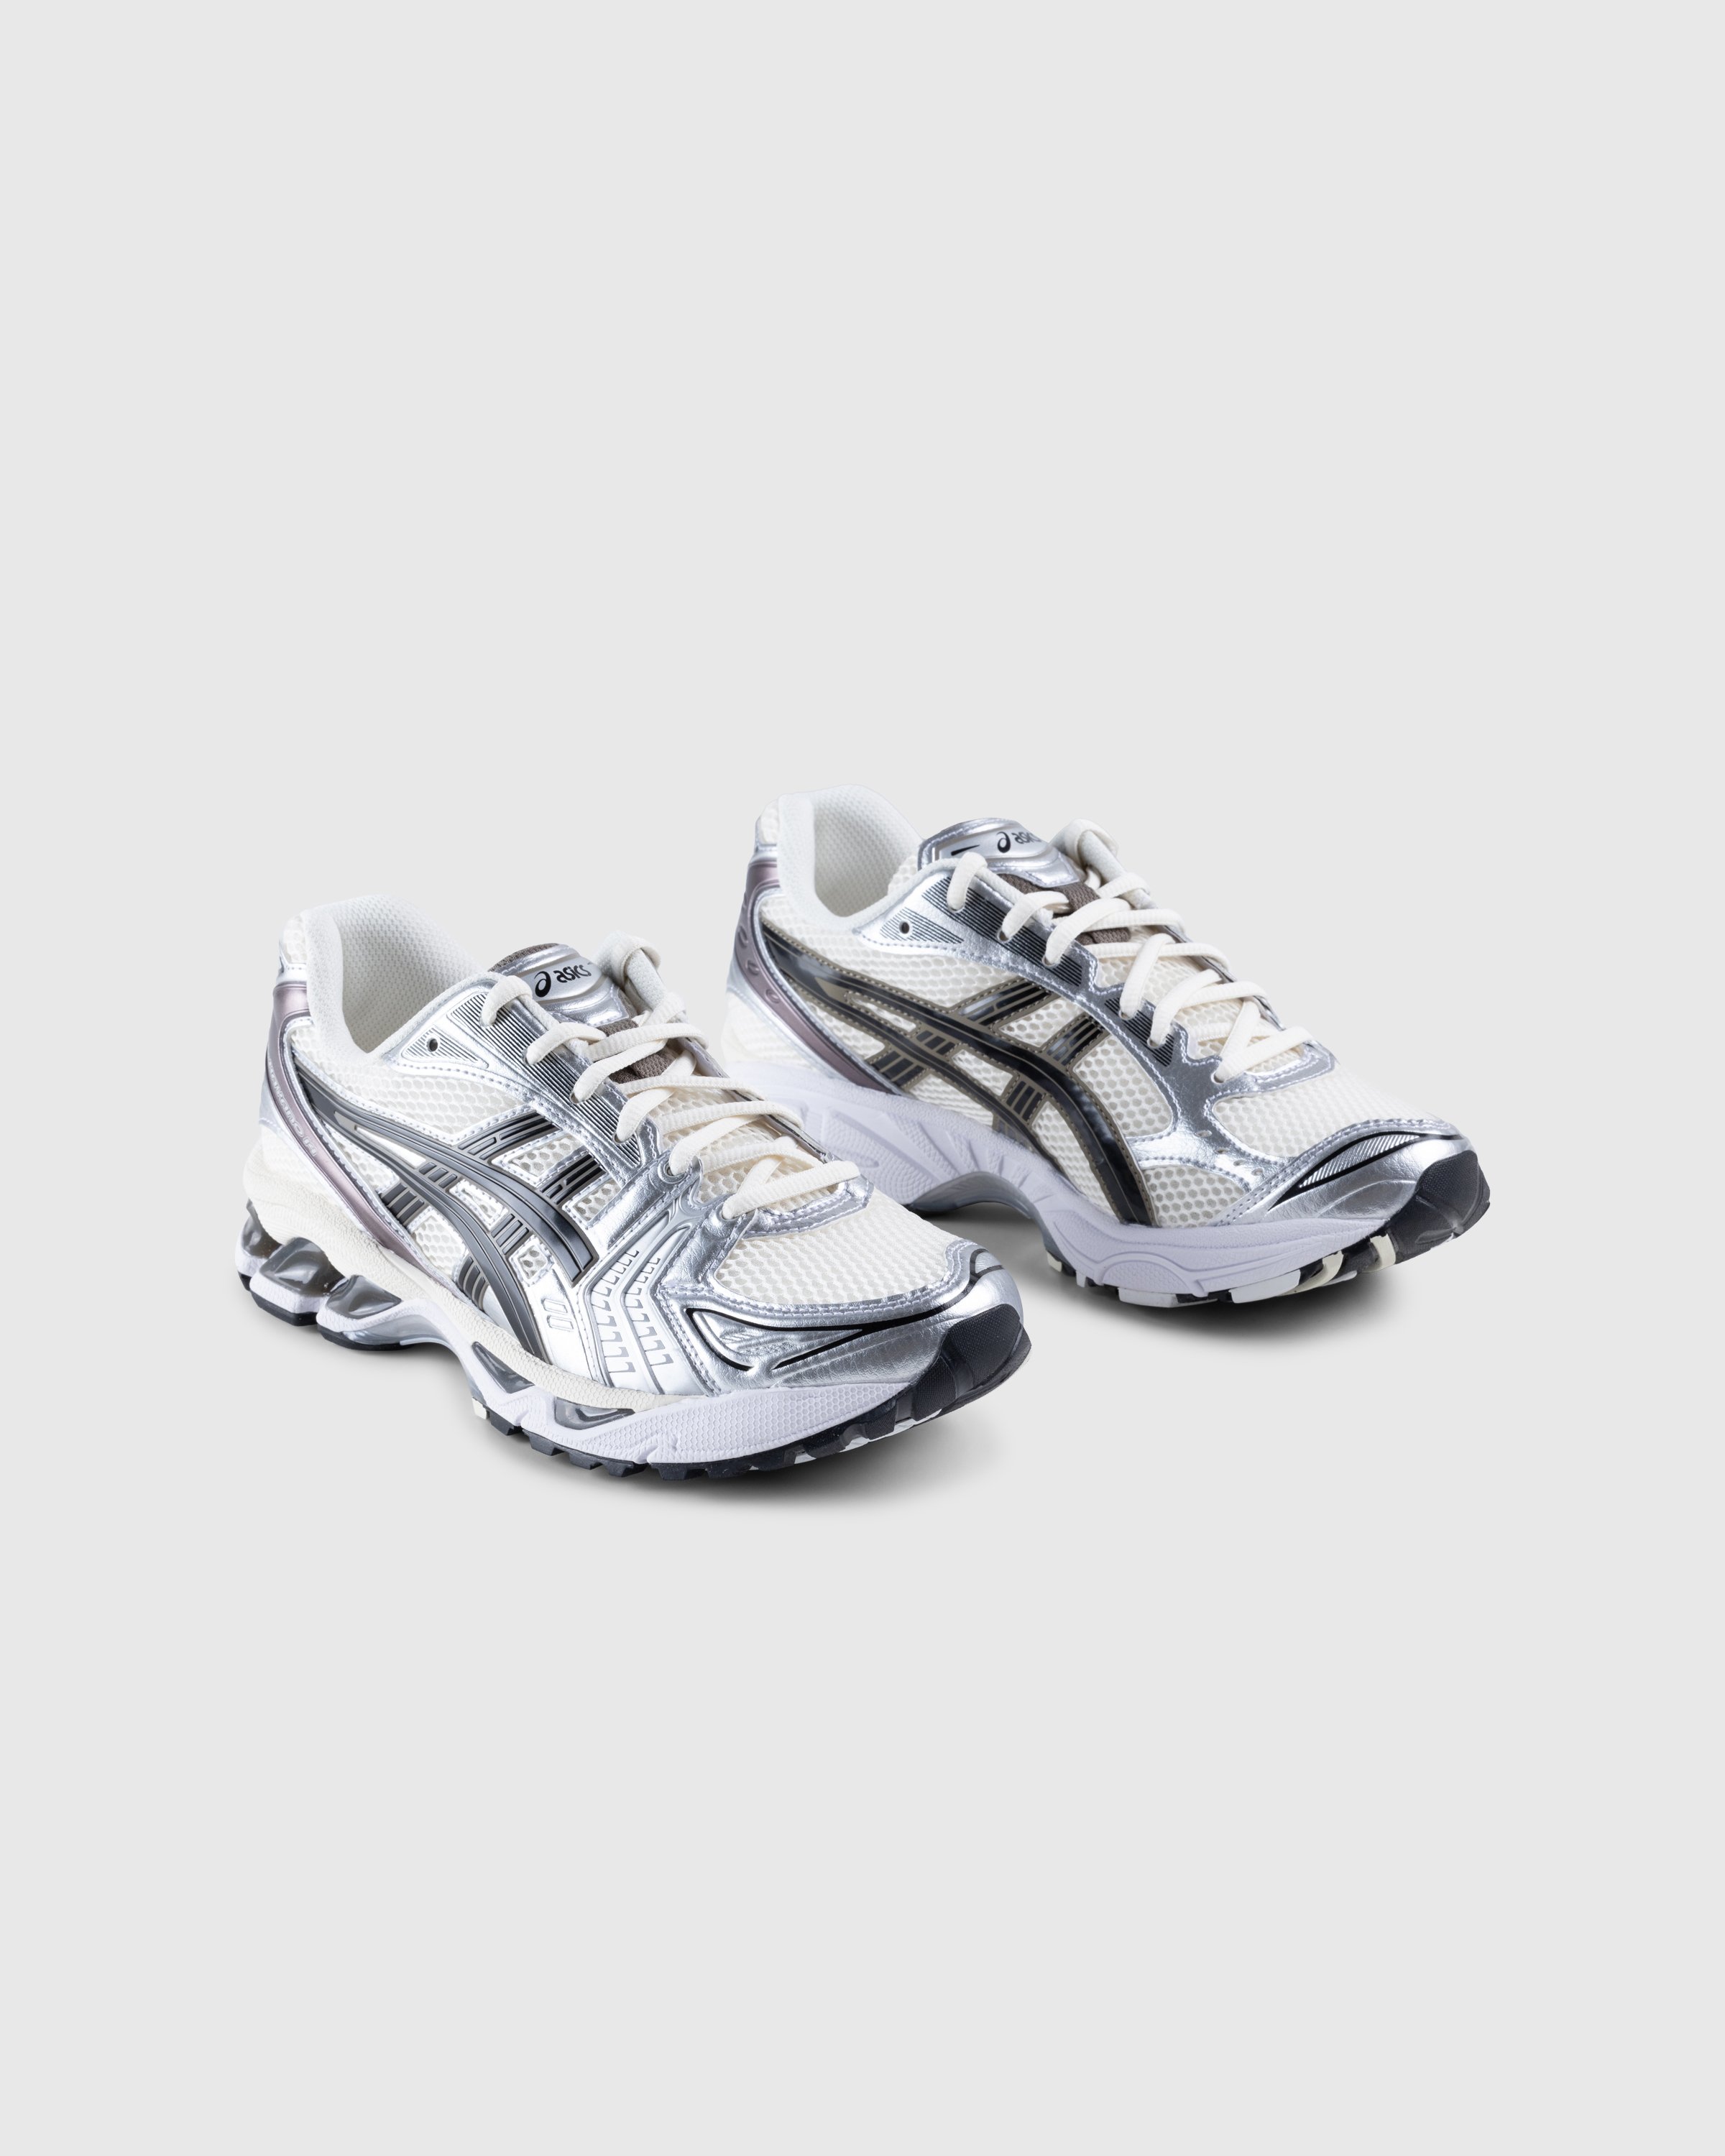 asics - GEL-KAYANO 14 Silver - Footwear - Silver - Image 3